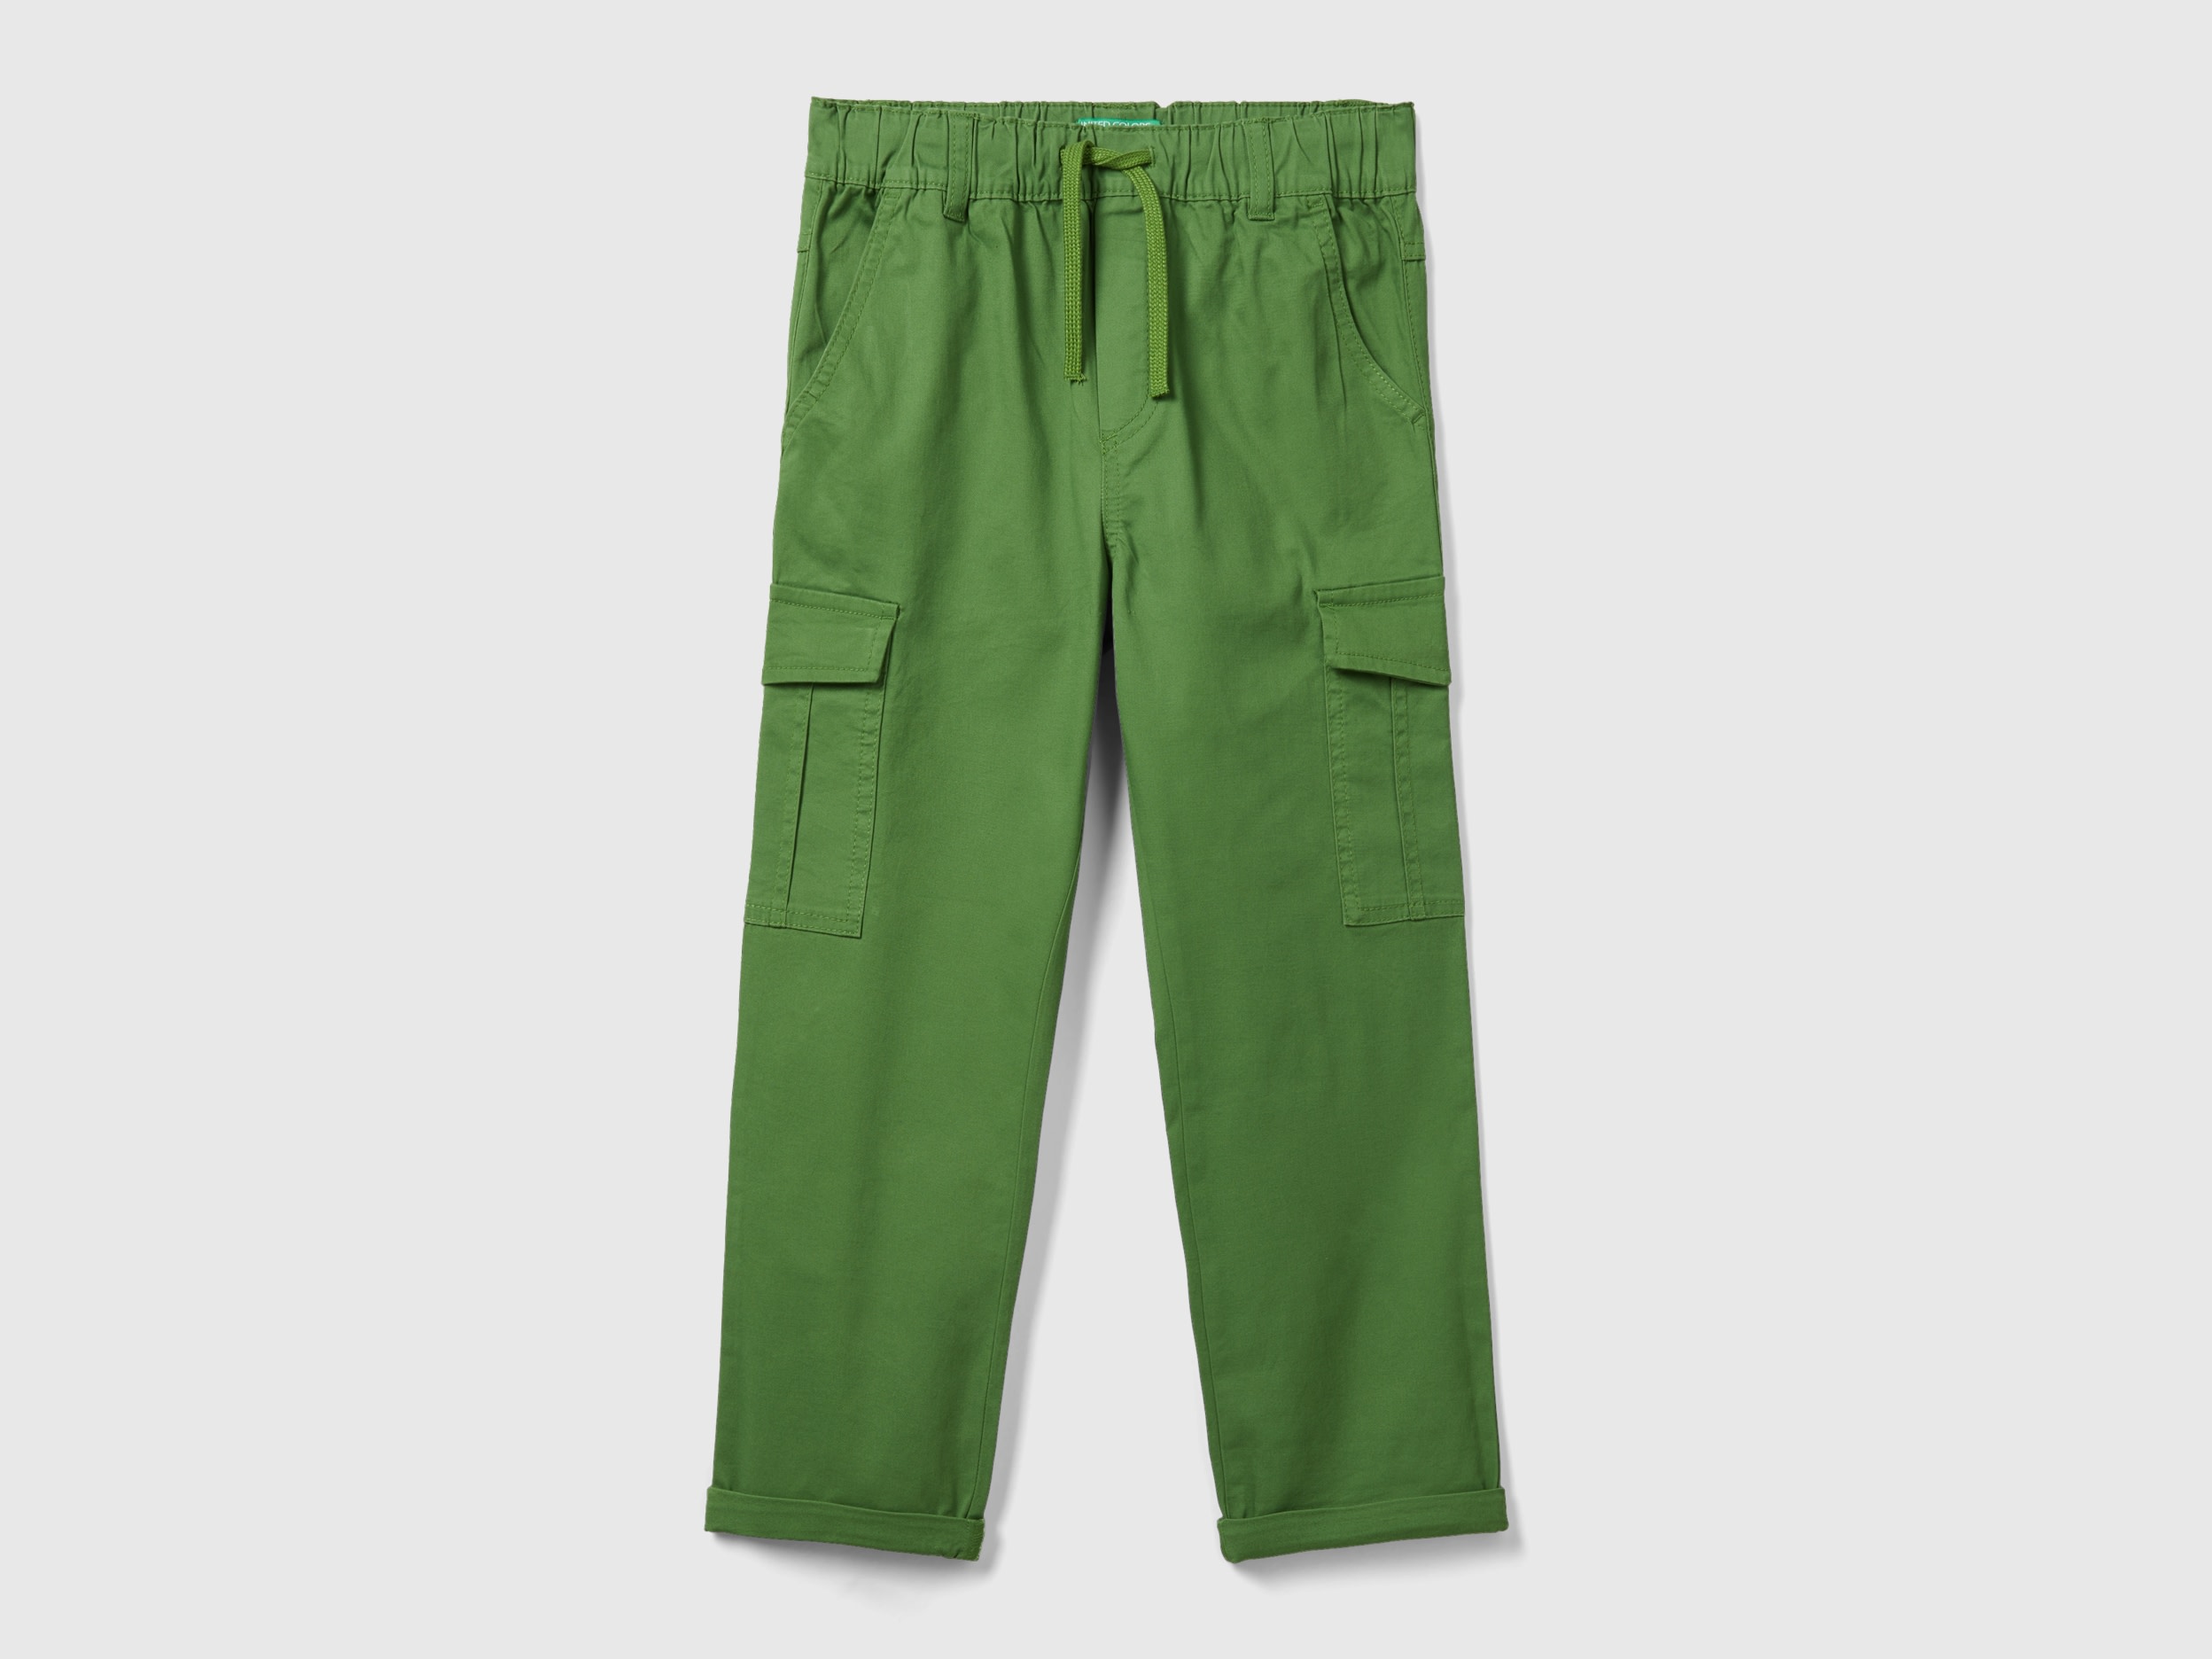 Benetton, Straight Leg Cargo Trousers, size 3XL, Military Green, Kids